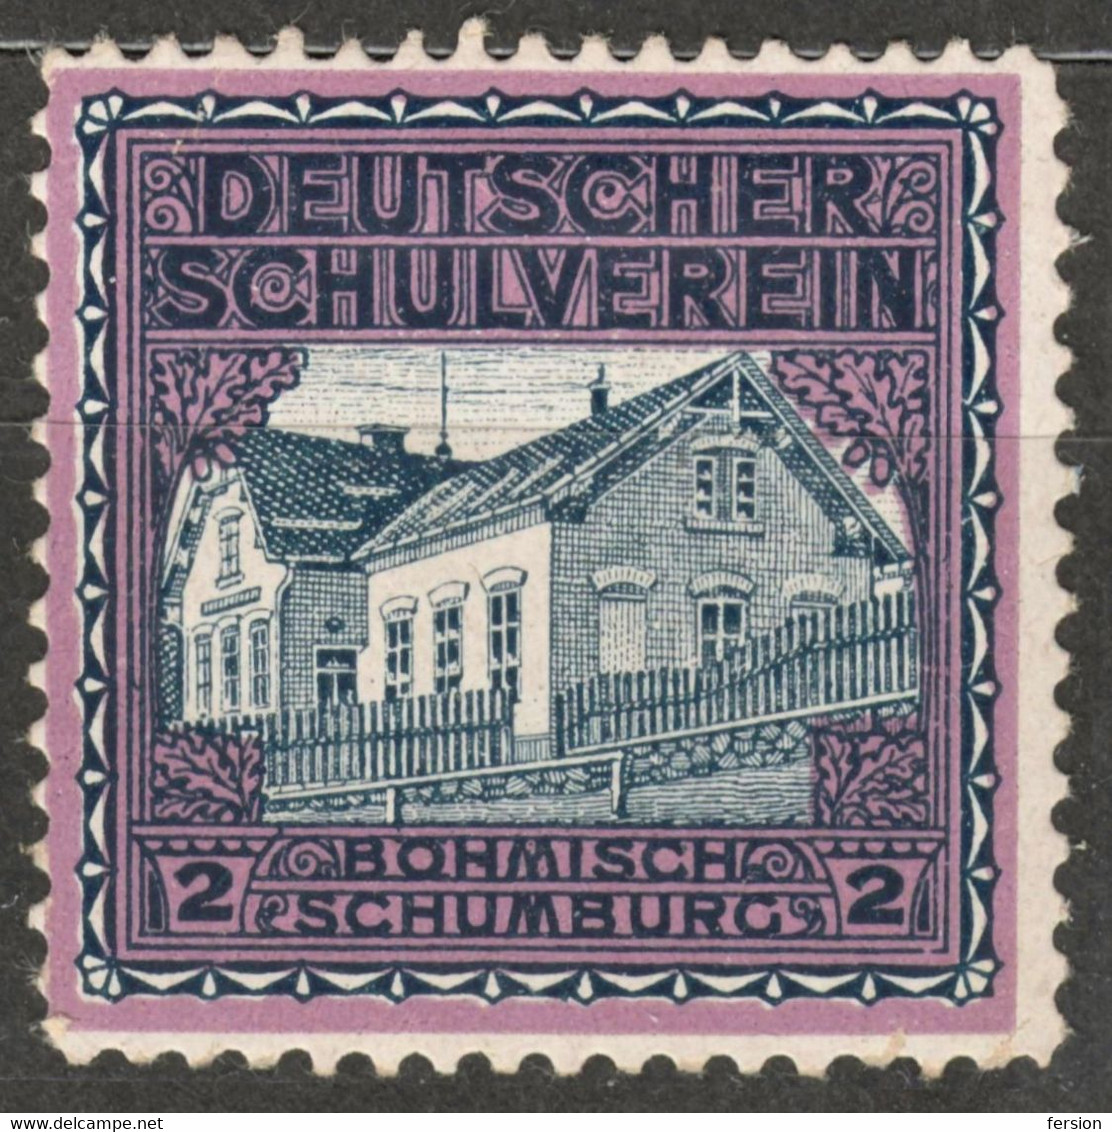 Böhmisch Schumburg Šumburk Czechia Bohemia Germany Austria Label Cinderella Vignette SCHOOL Deutscher Schulverein - ...-1918 Prefilatelia